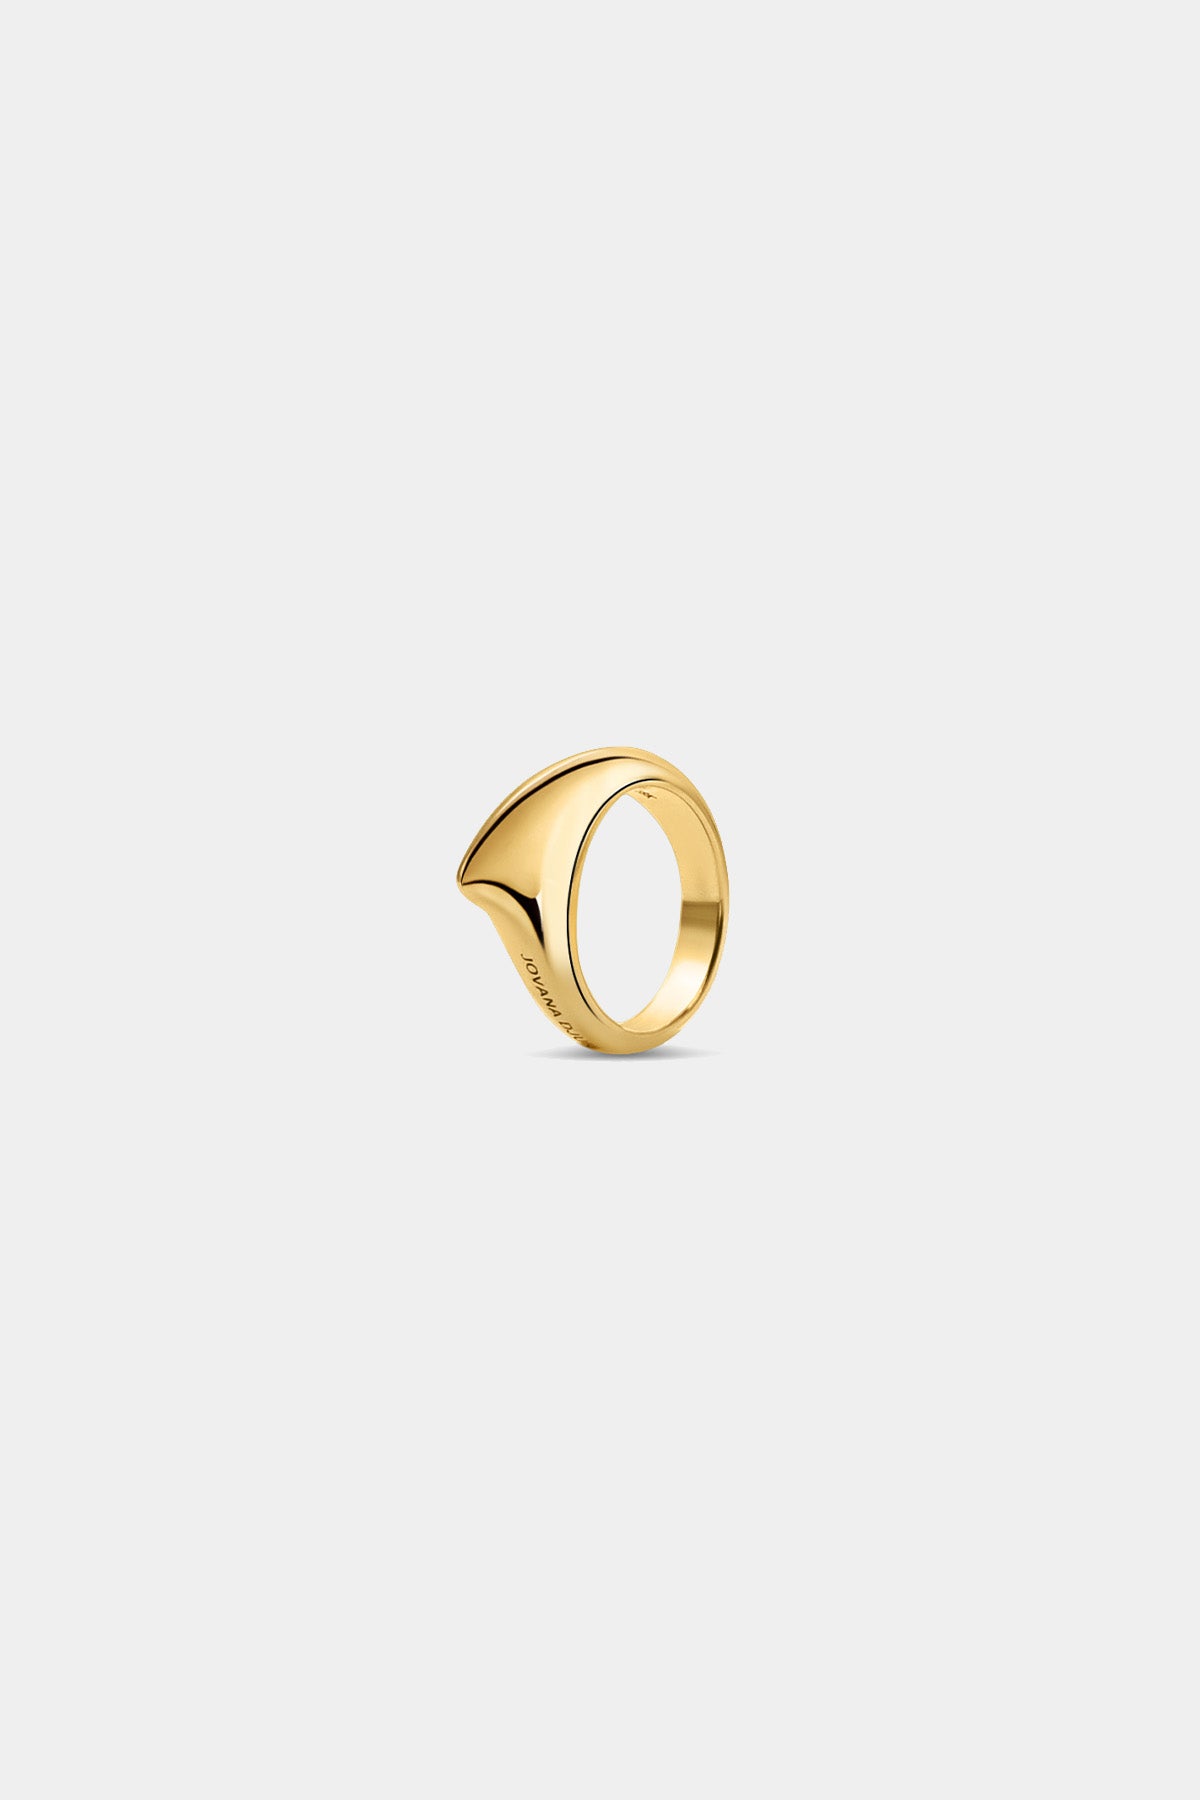 JOVANA DJURIC | SMALL YELLOW GOLD CRESCENT RING